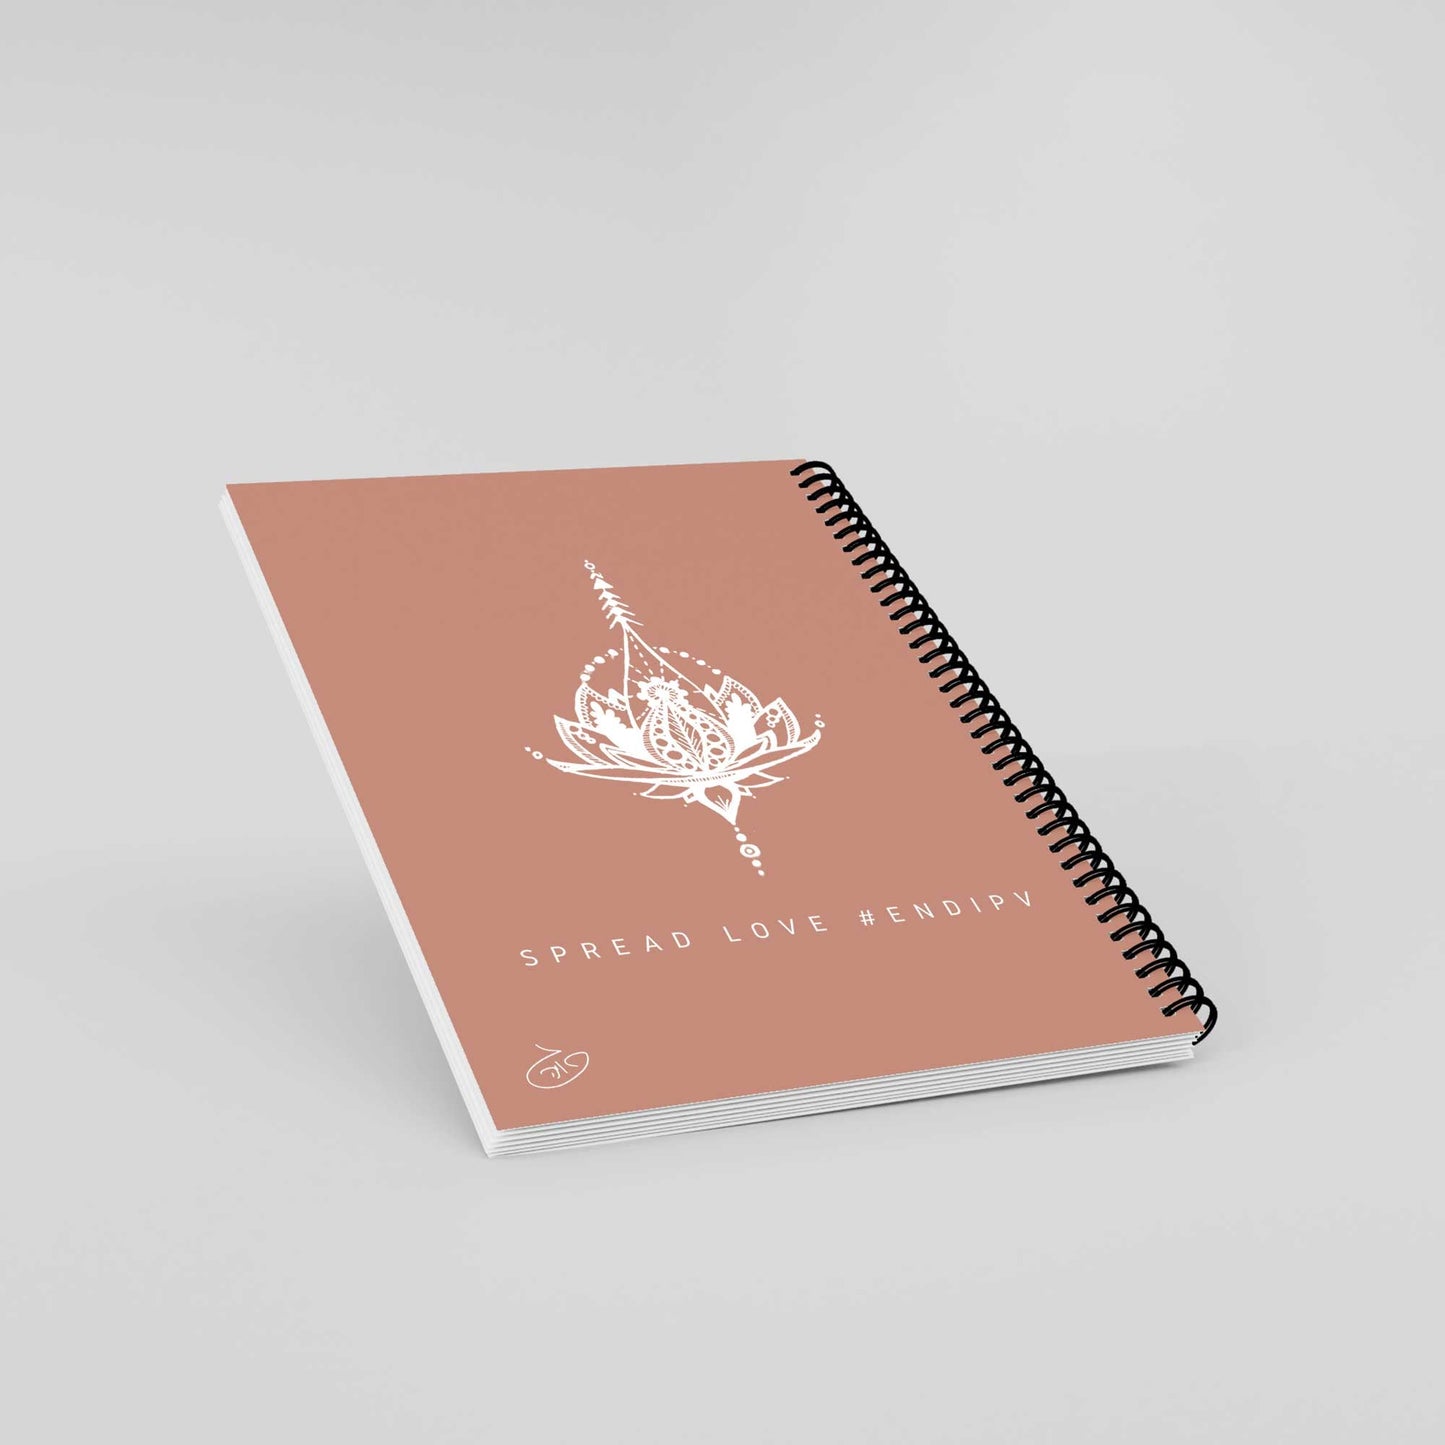 White Lily Lotus Notebook | Gaya's Drawing | מחברת ספירלה עם הציורים של גאיה